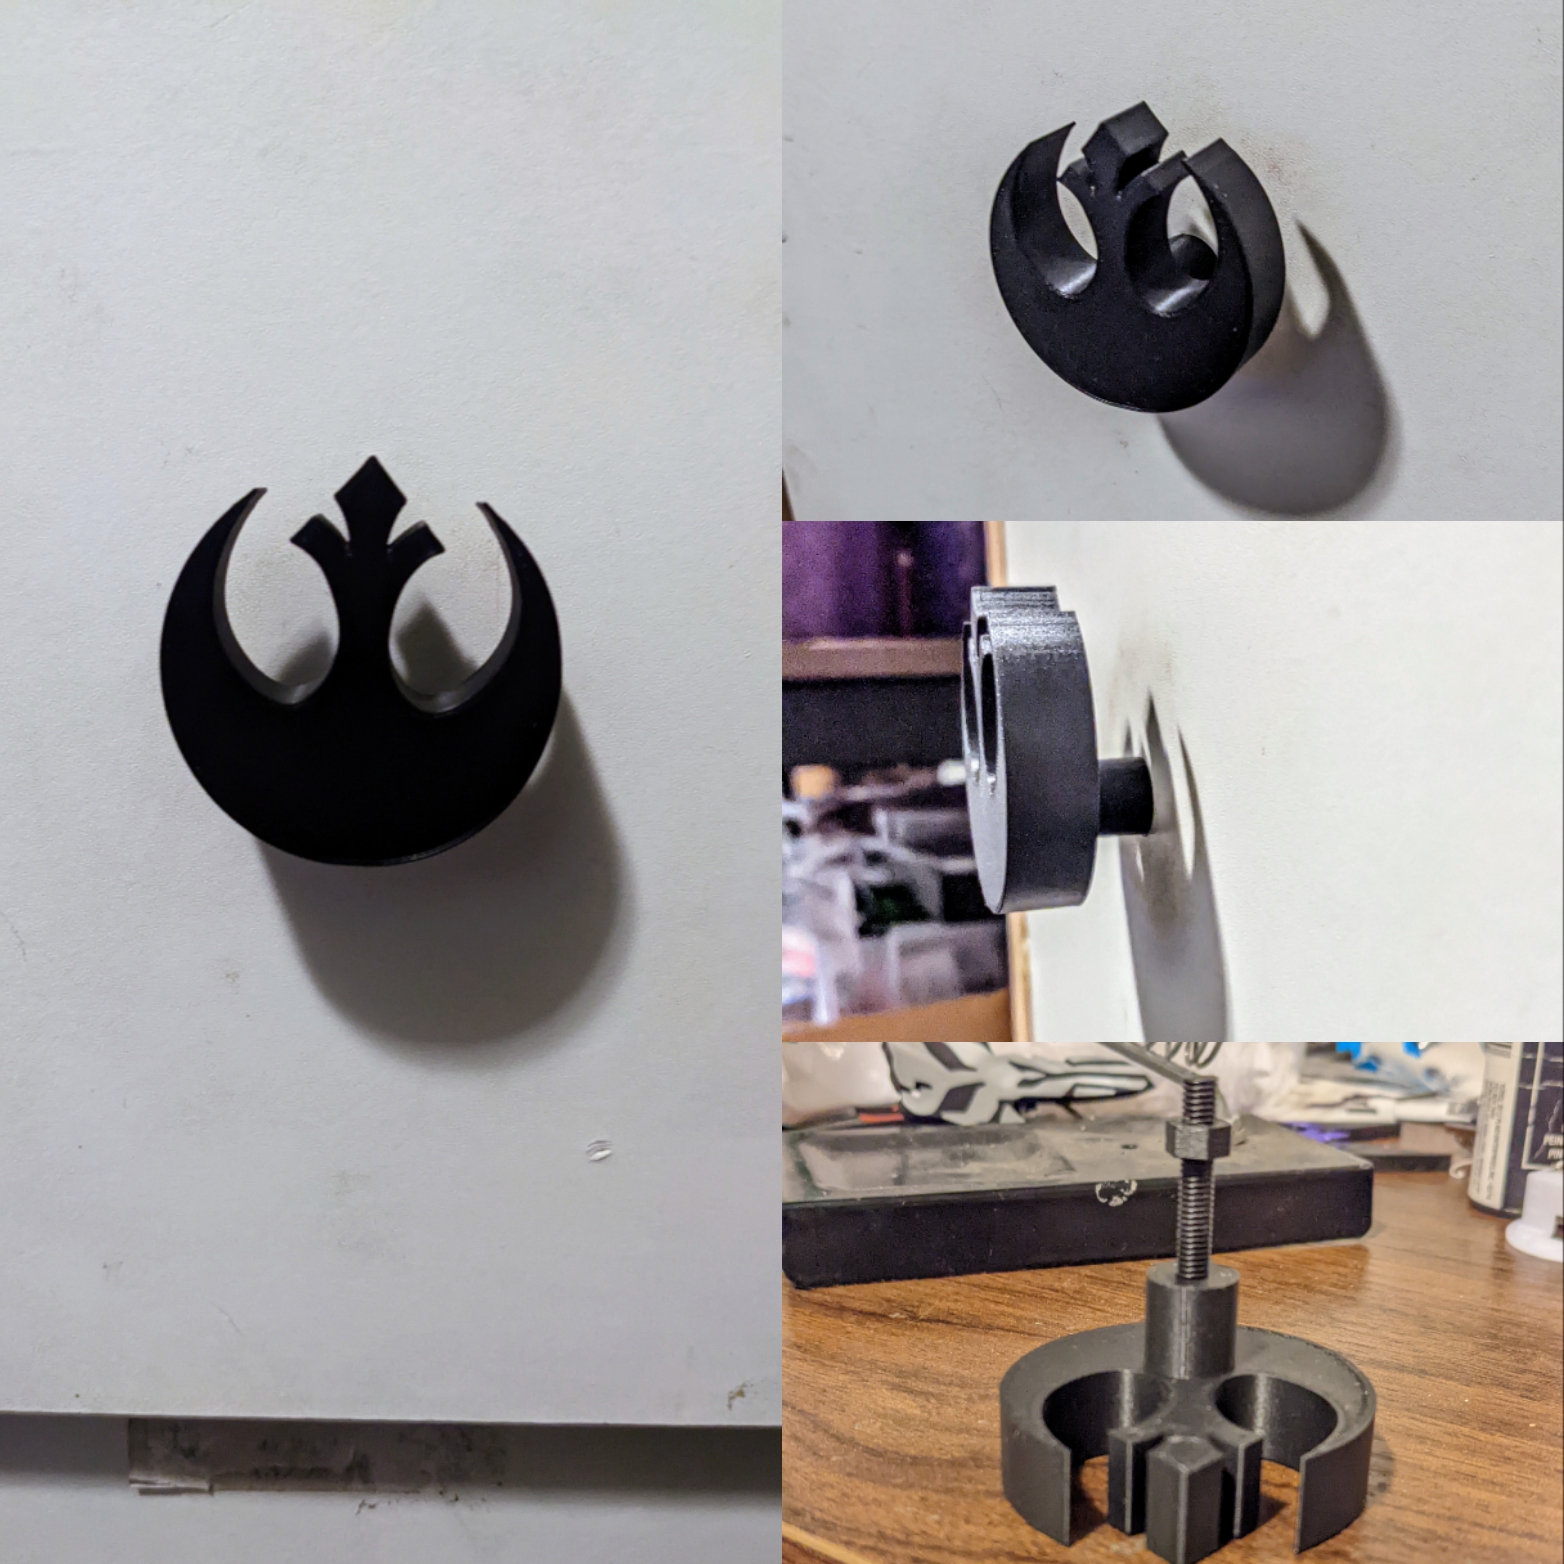 Rebel Alliance Dresser Knob